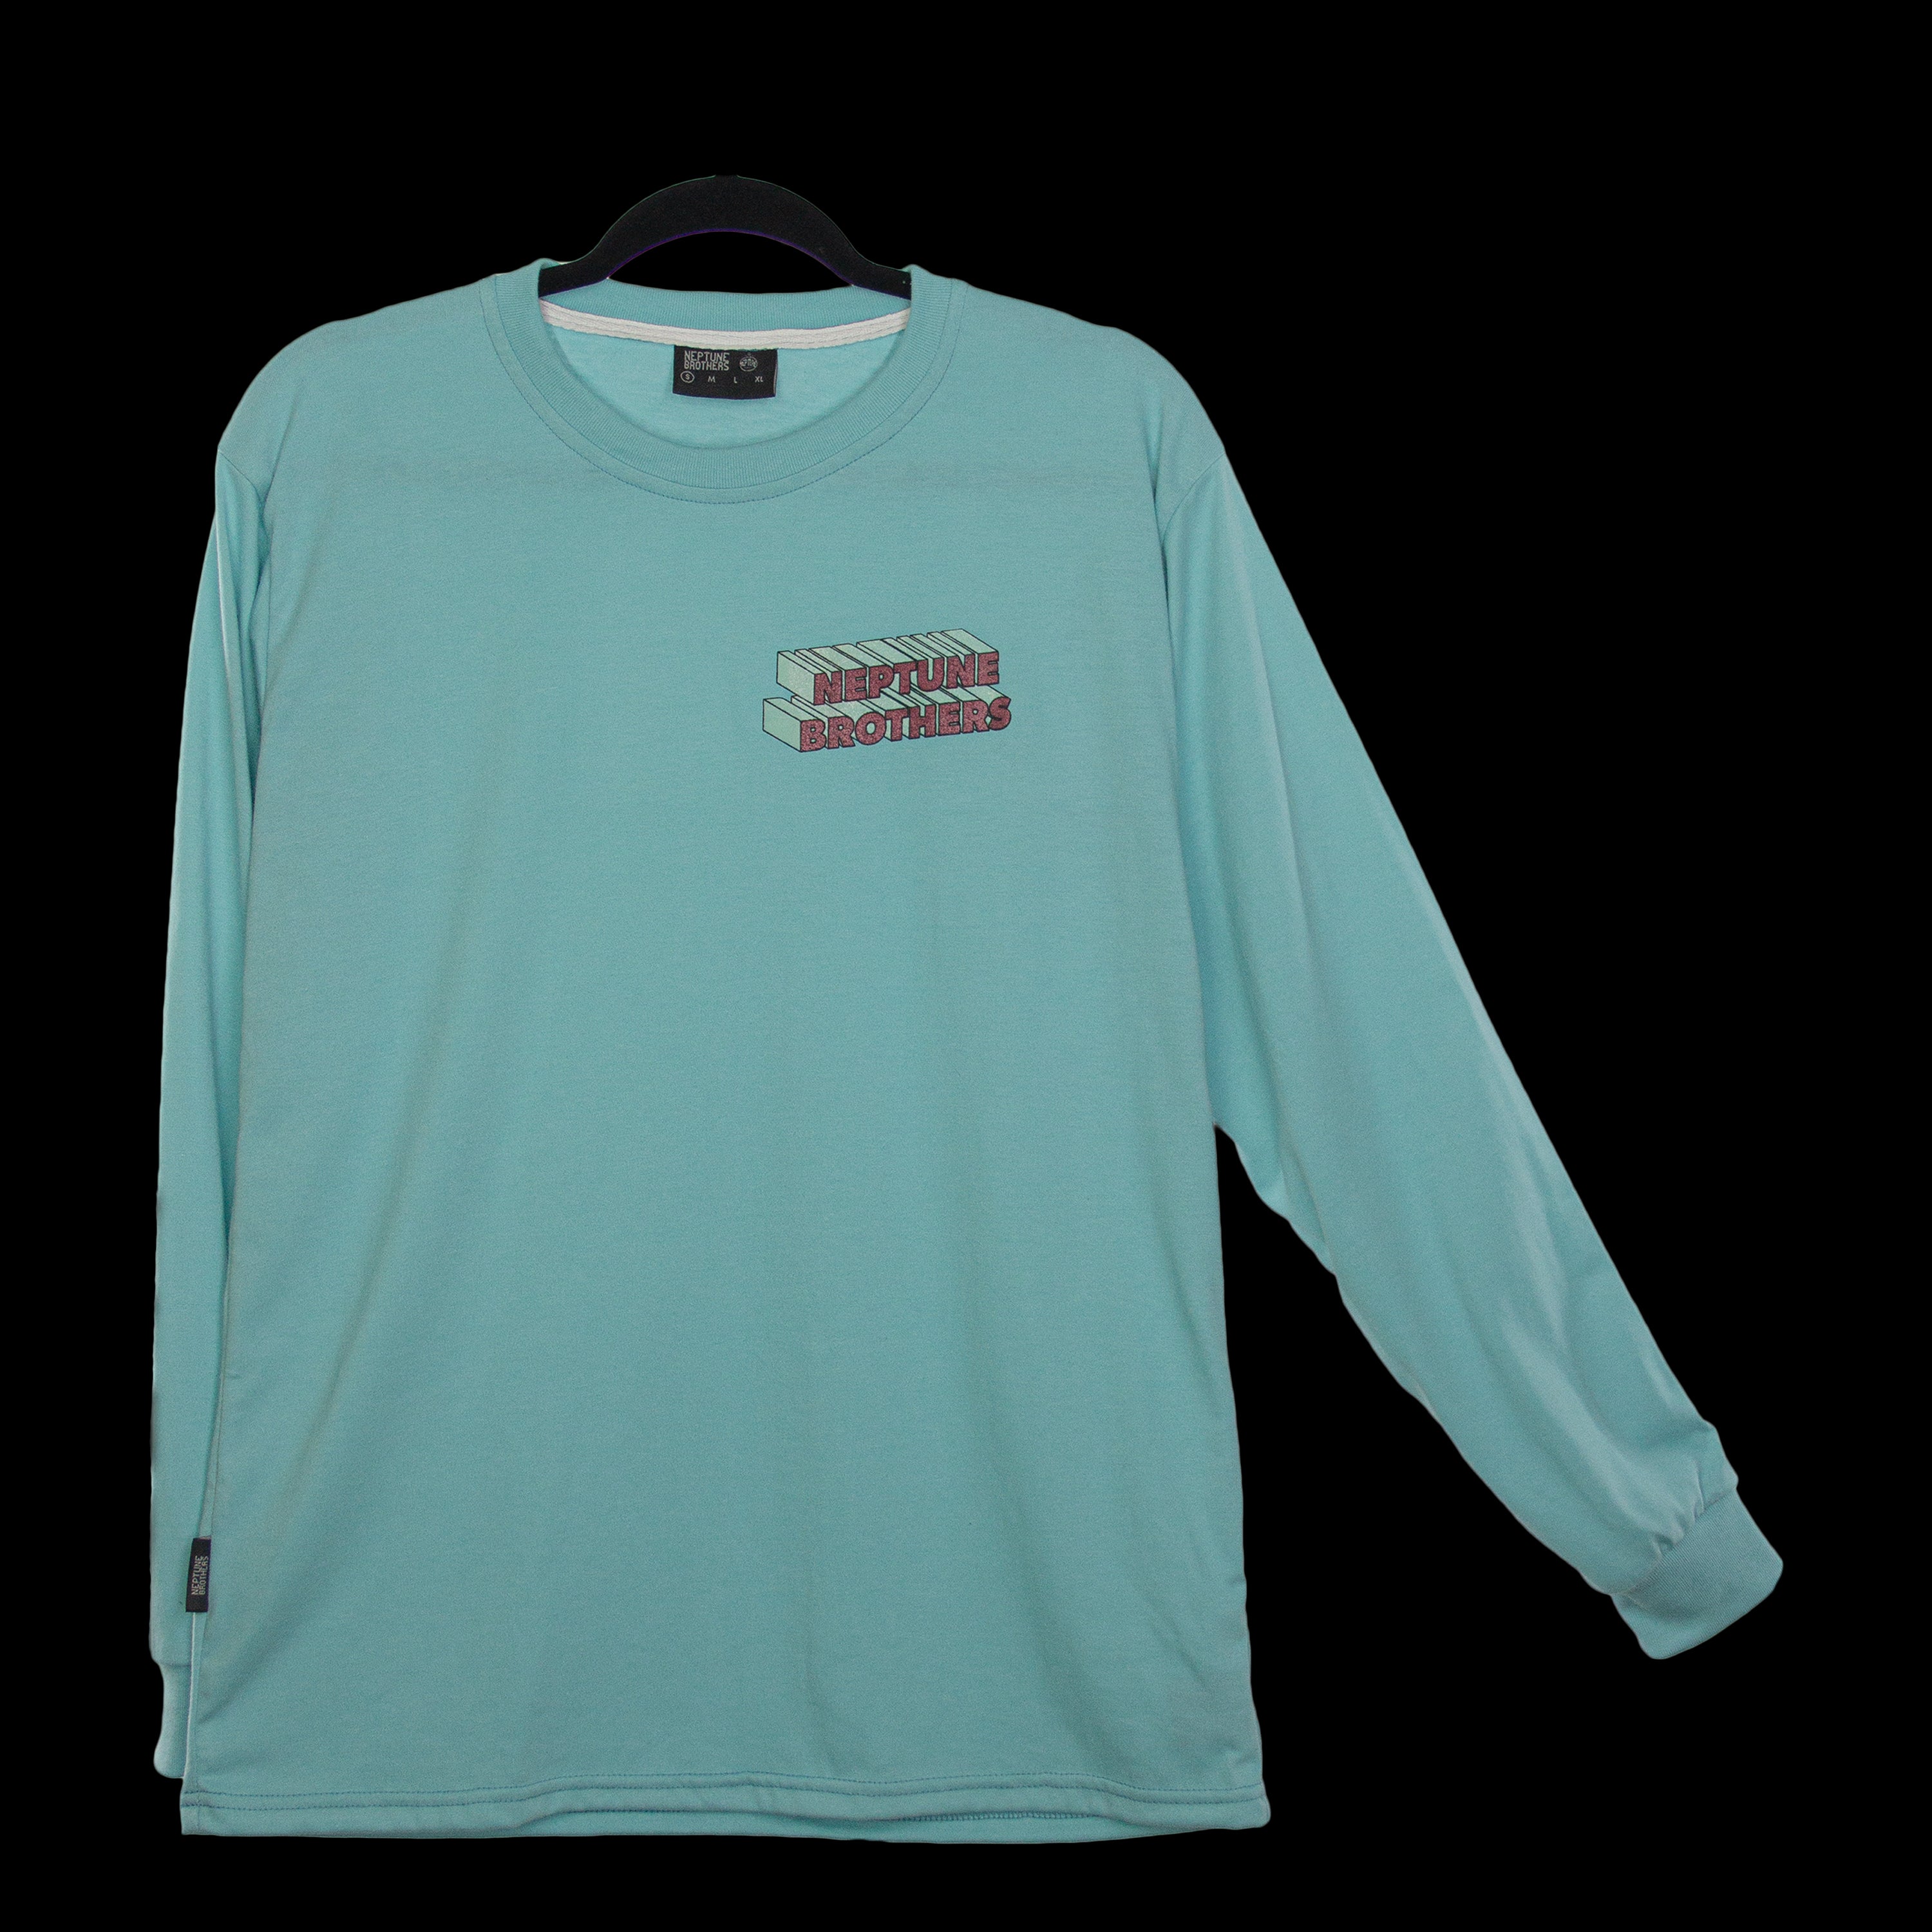 Aqua Long Sleeve T-Shirt Dark” Edition Neptune Brothers